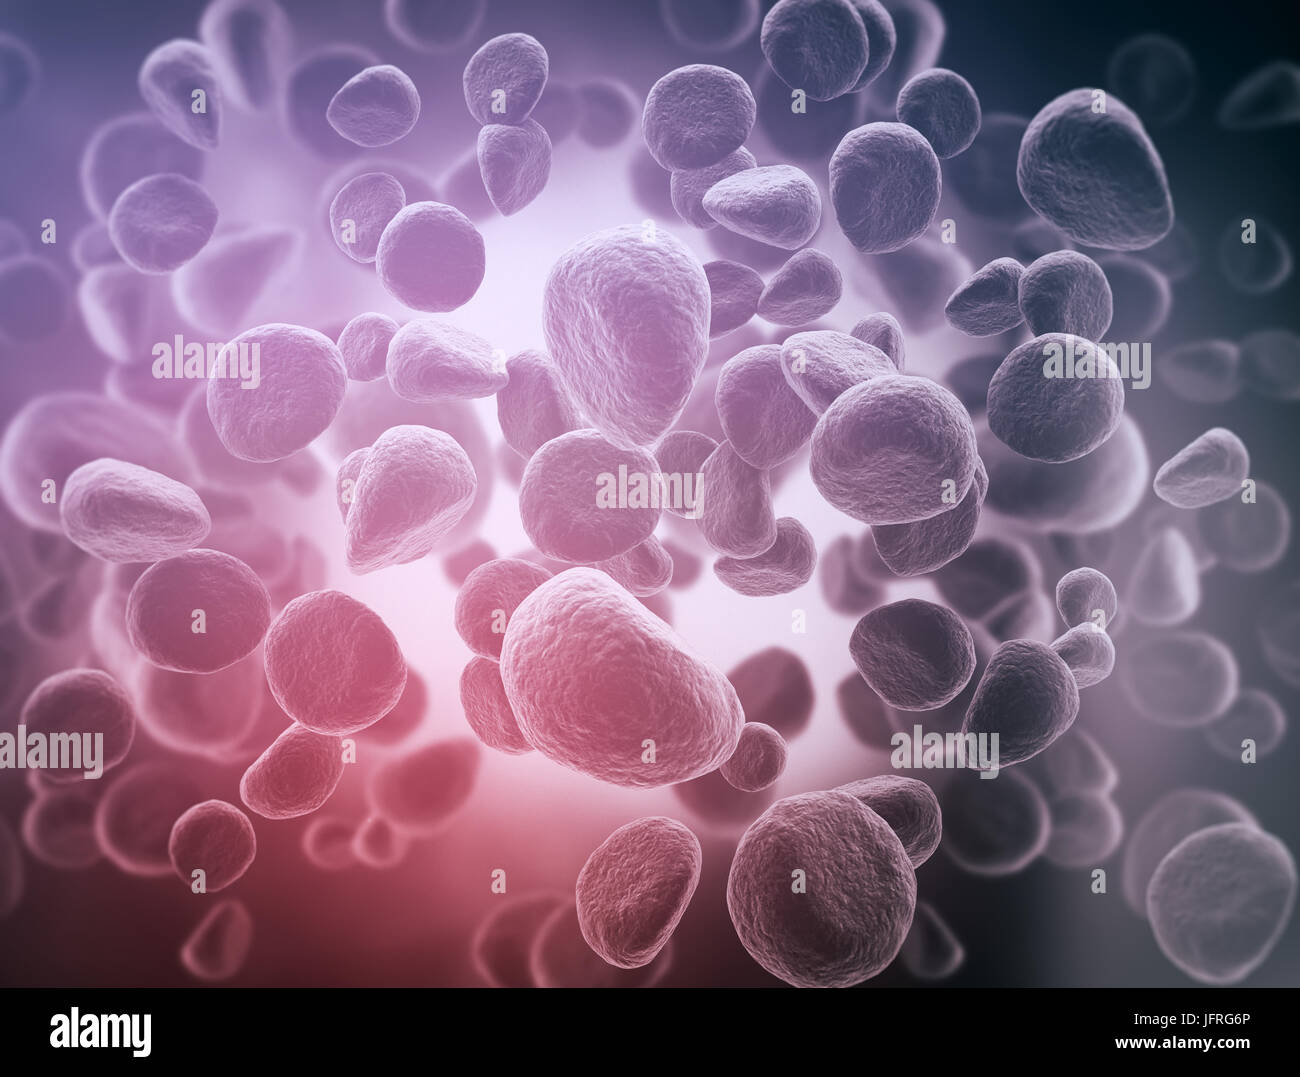 High resolution Illustration of cells Stock Photo